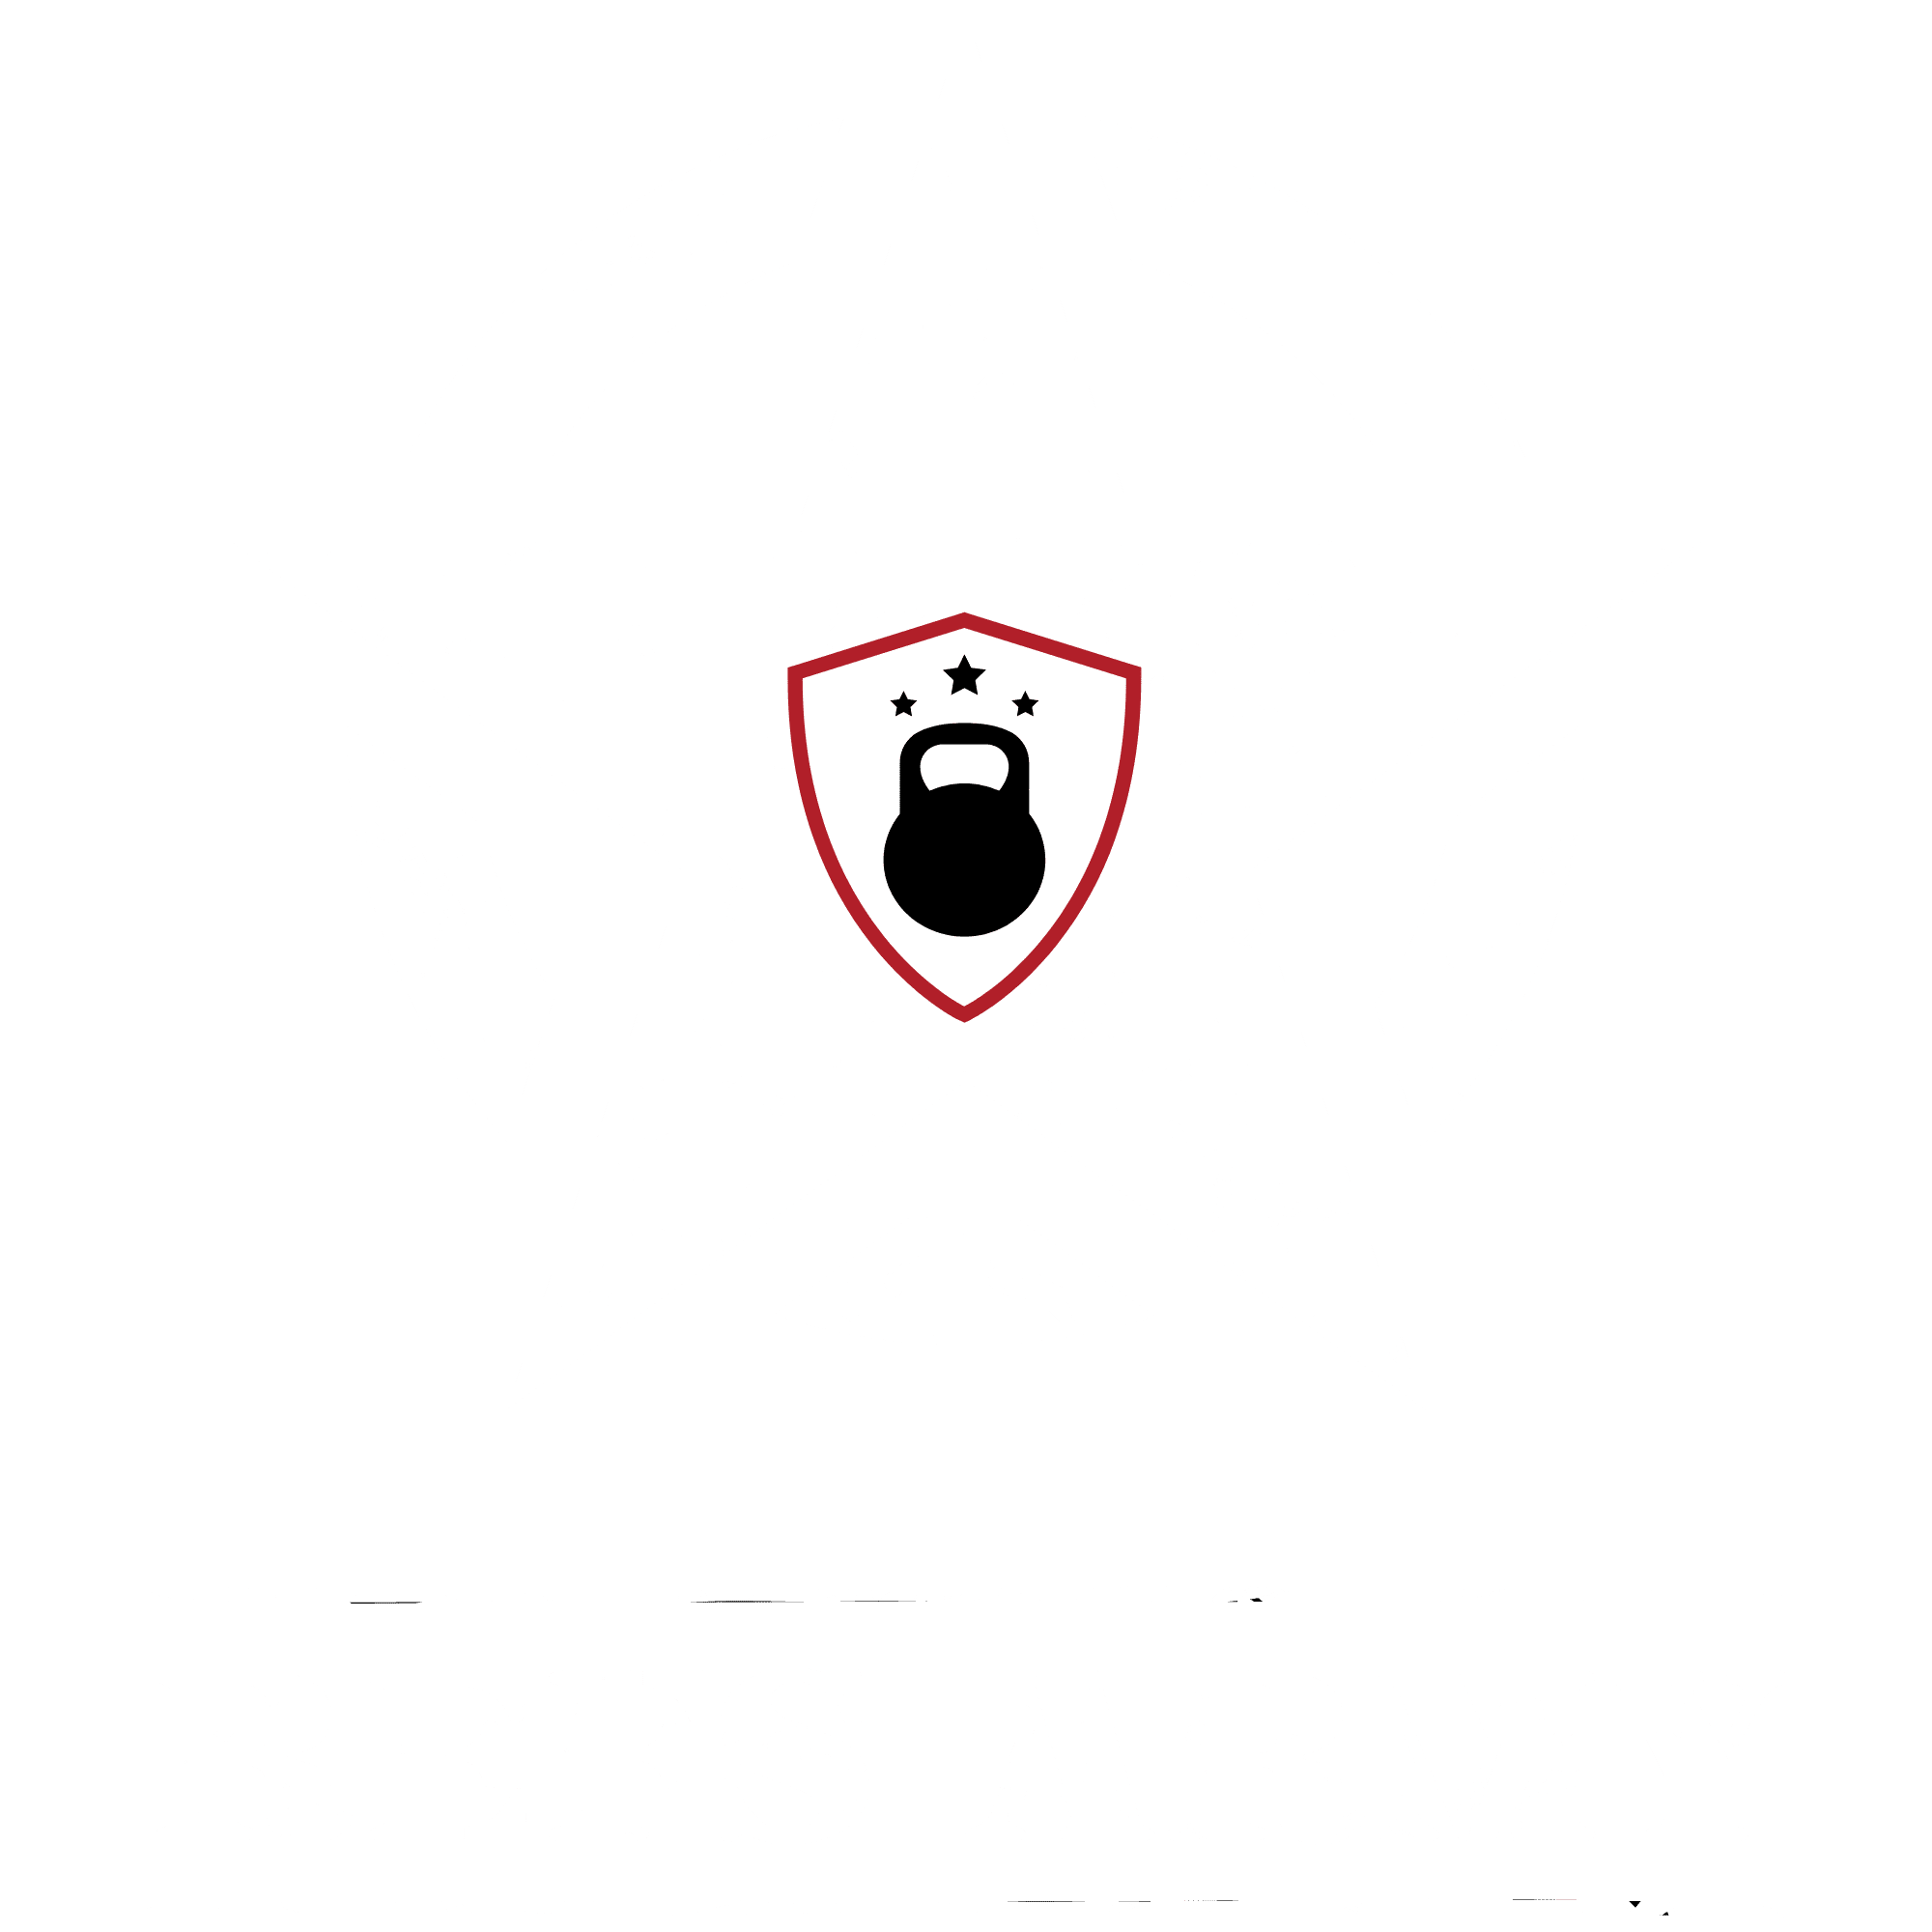 Refs Army